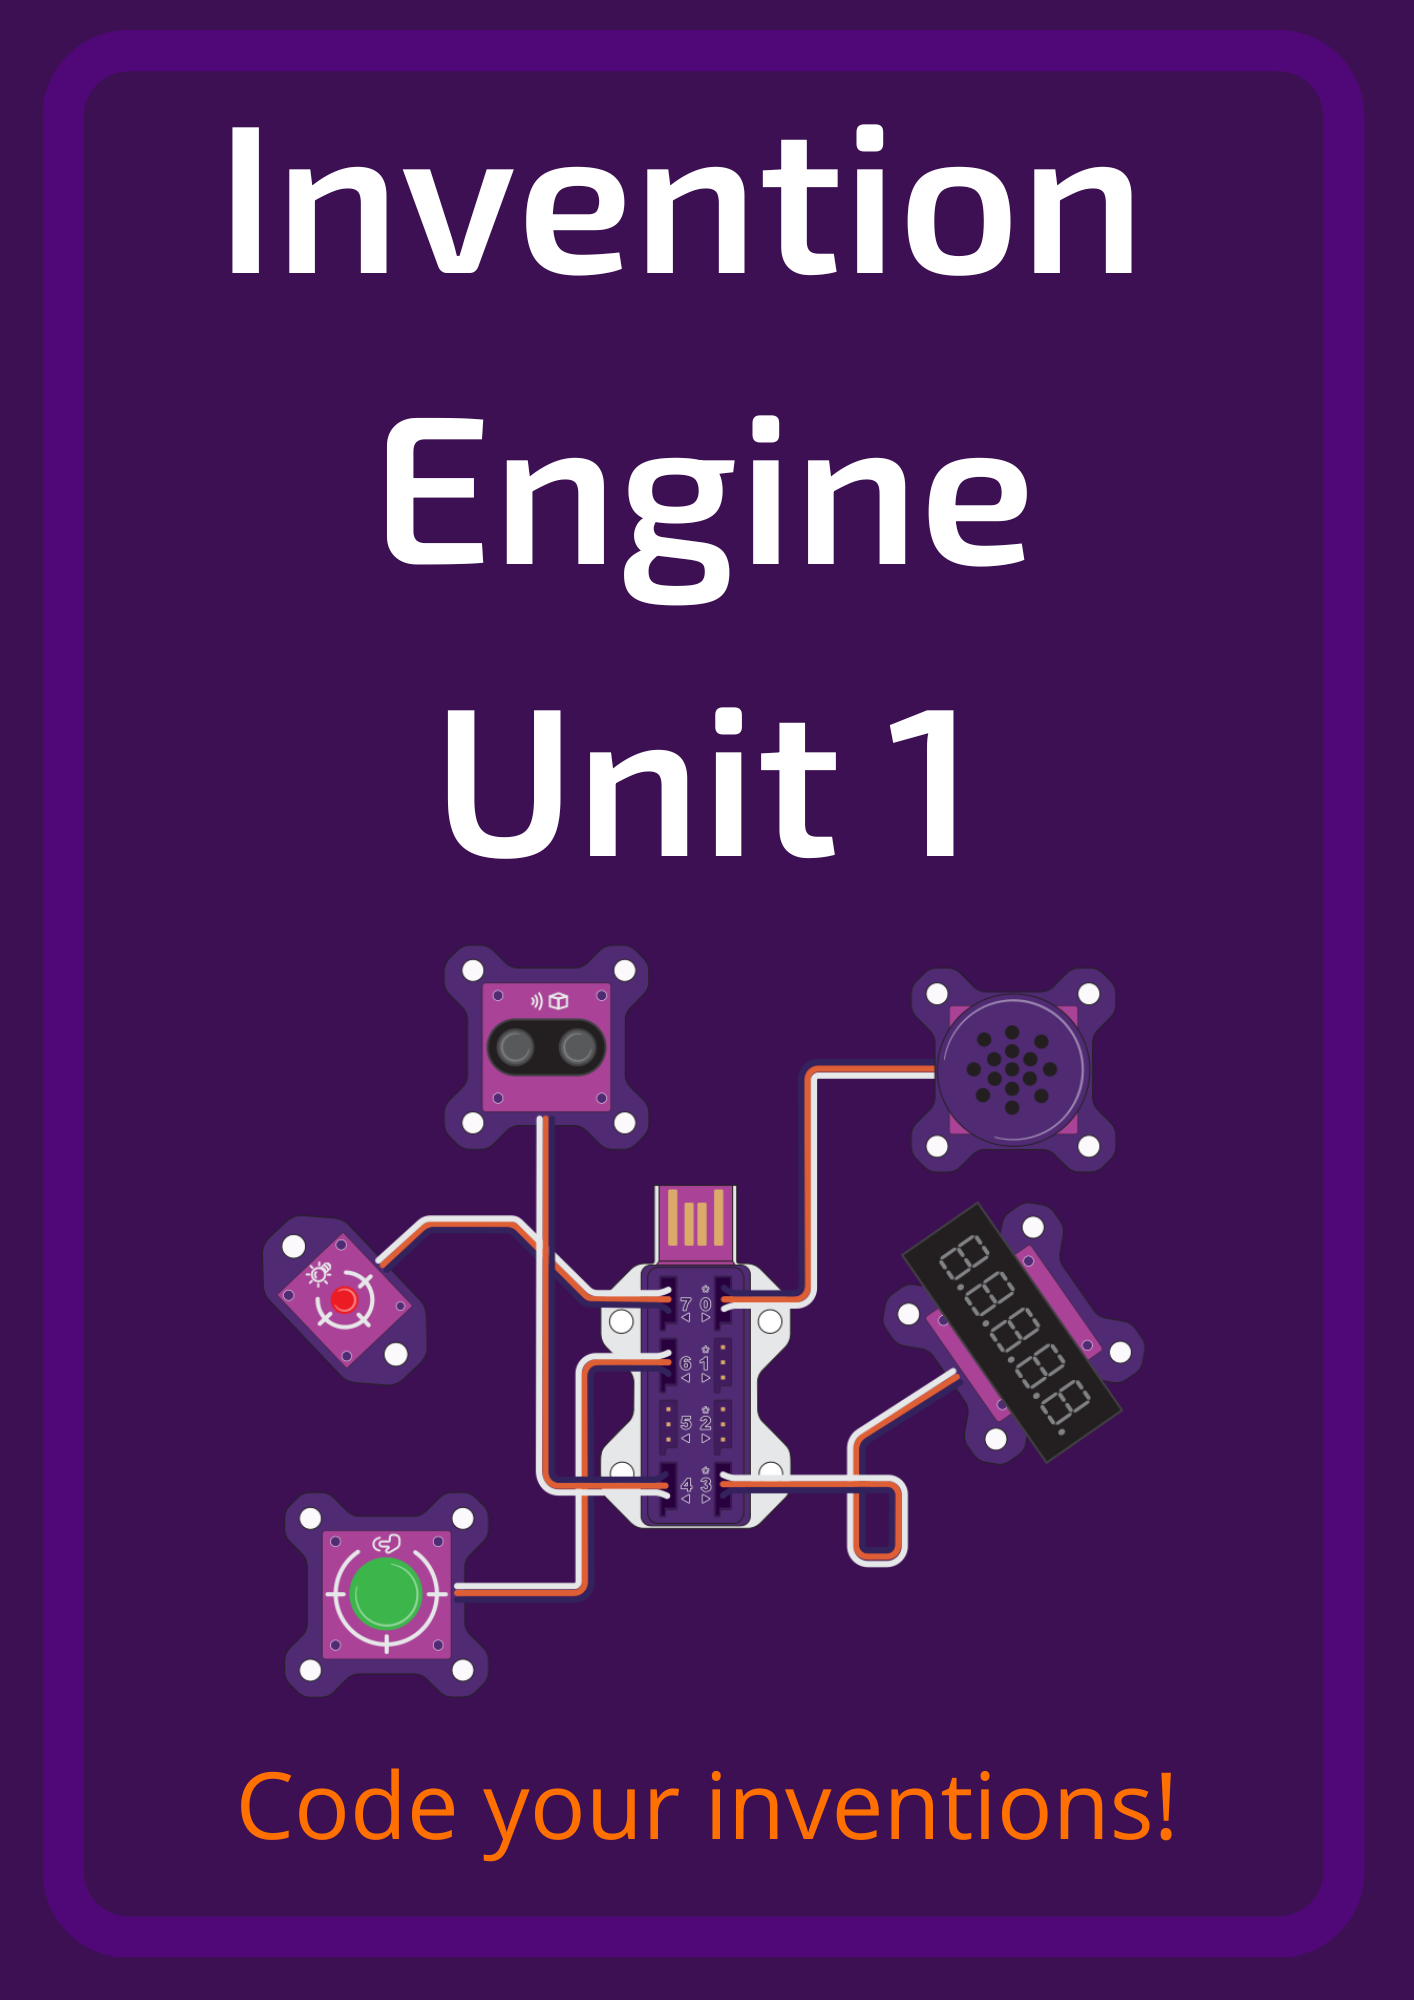 Invention Engine unit 1 image